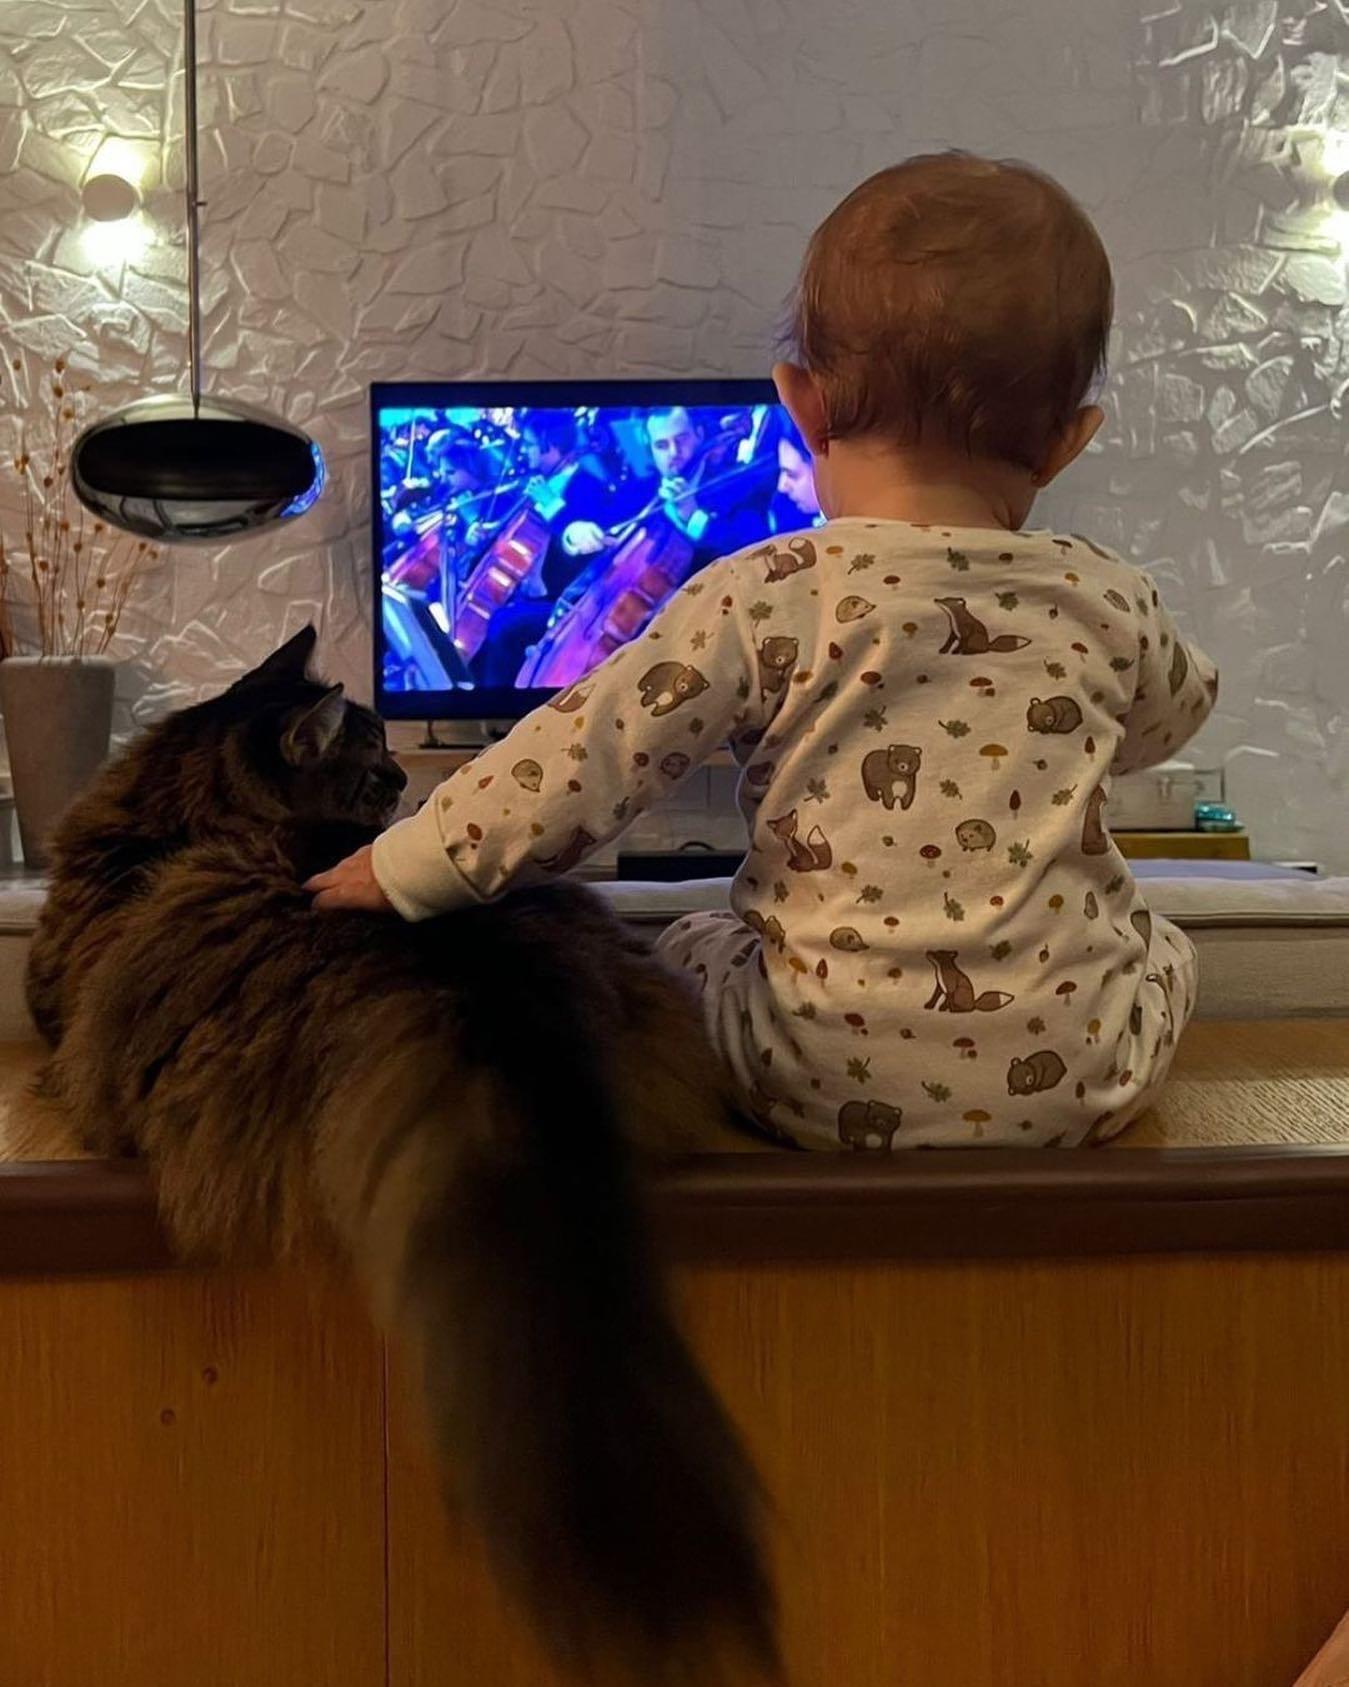 fiica lui smiley se uita la tv si mangaioe pisica